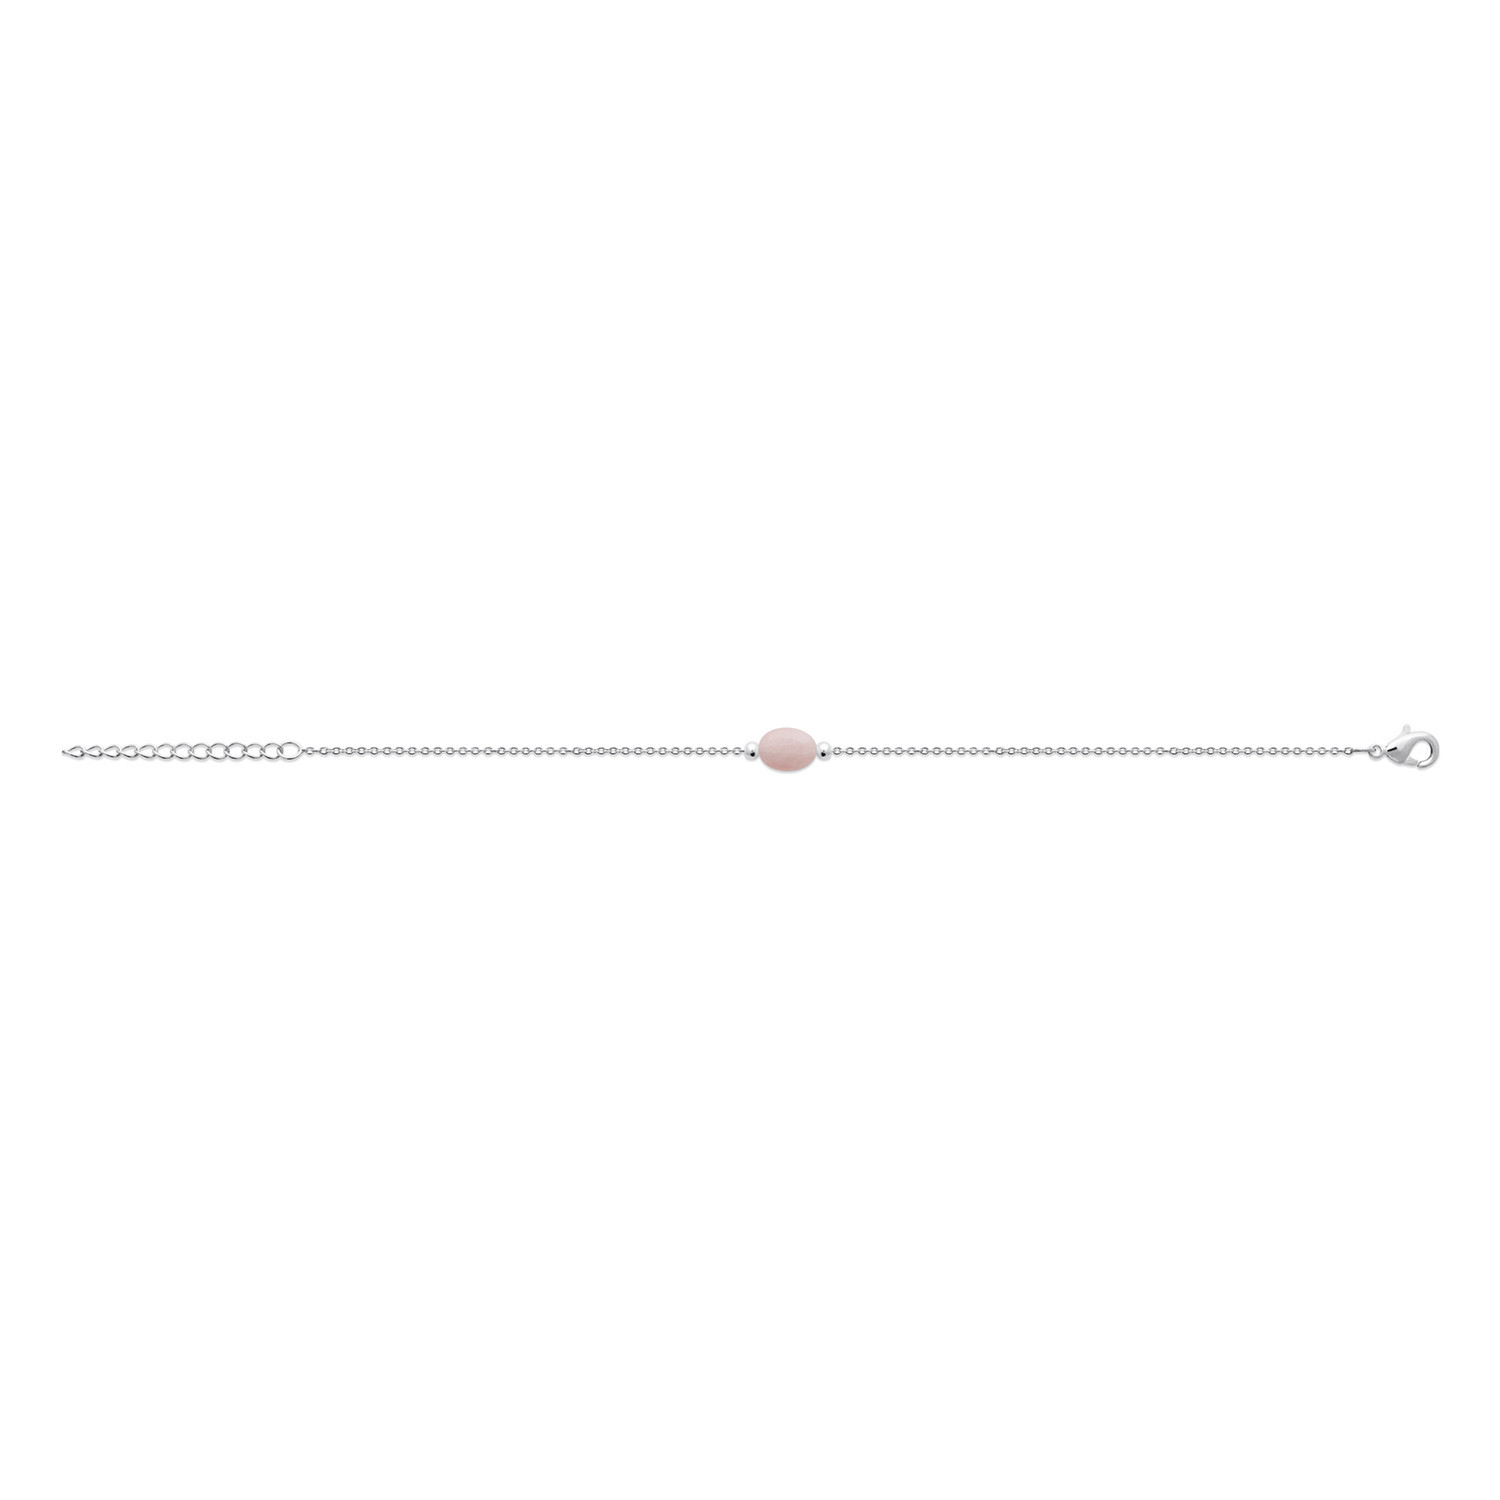 Bracelet Brillaxis argent quartz rose